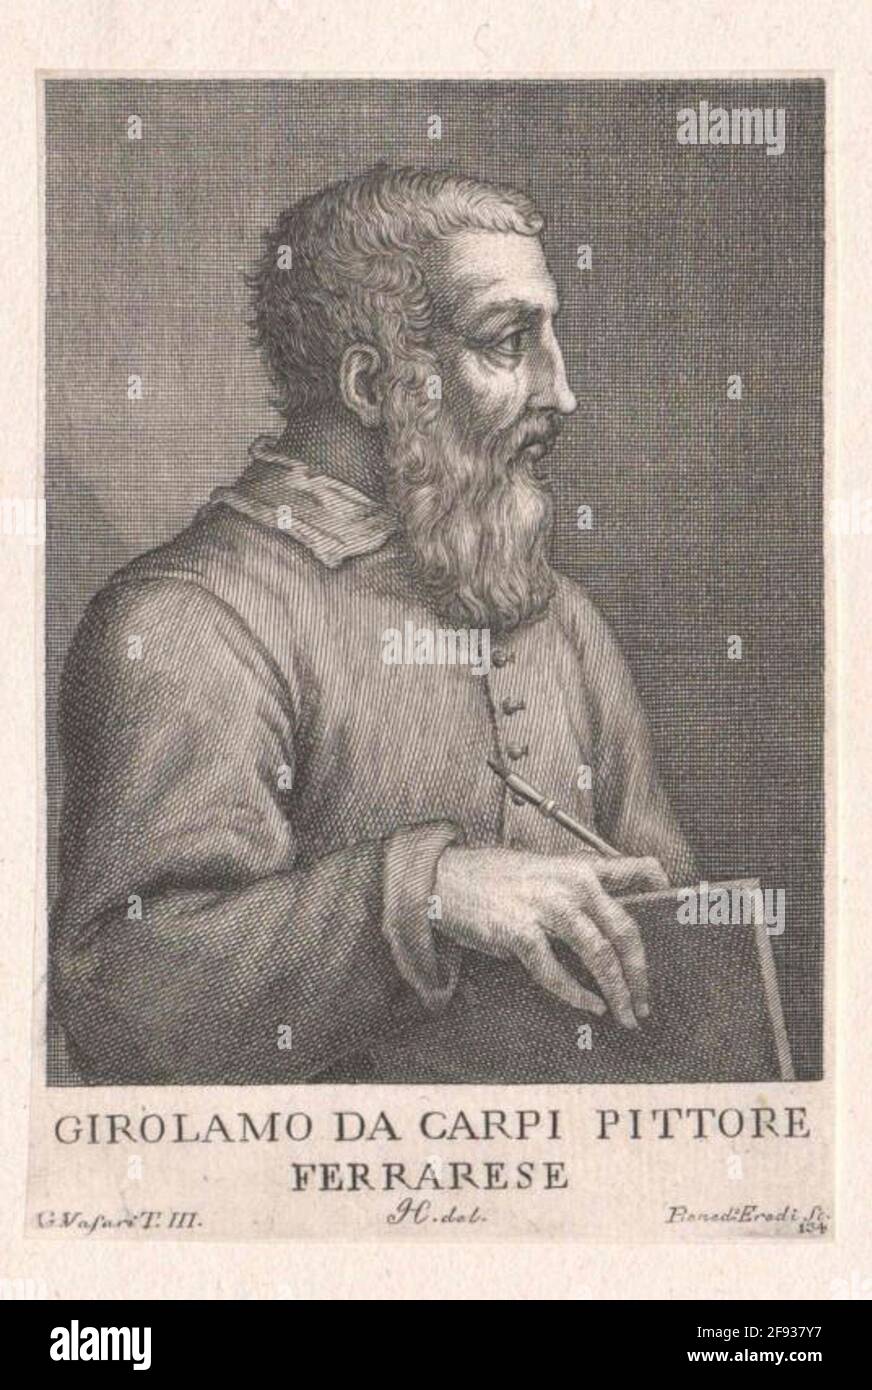 Carpi, Girolamo da. Stockfoto